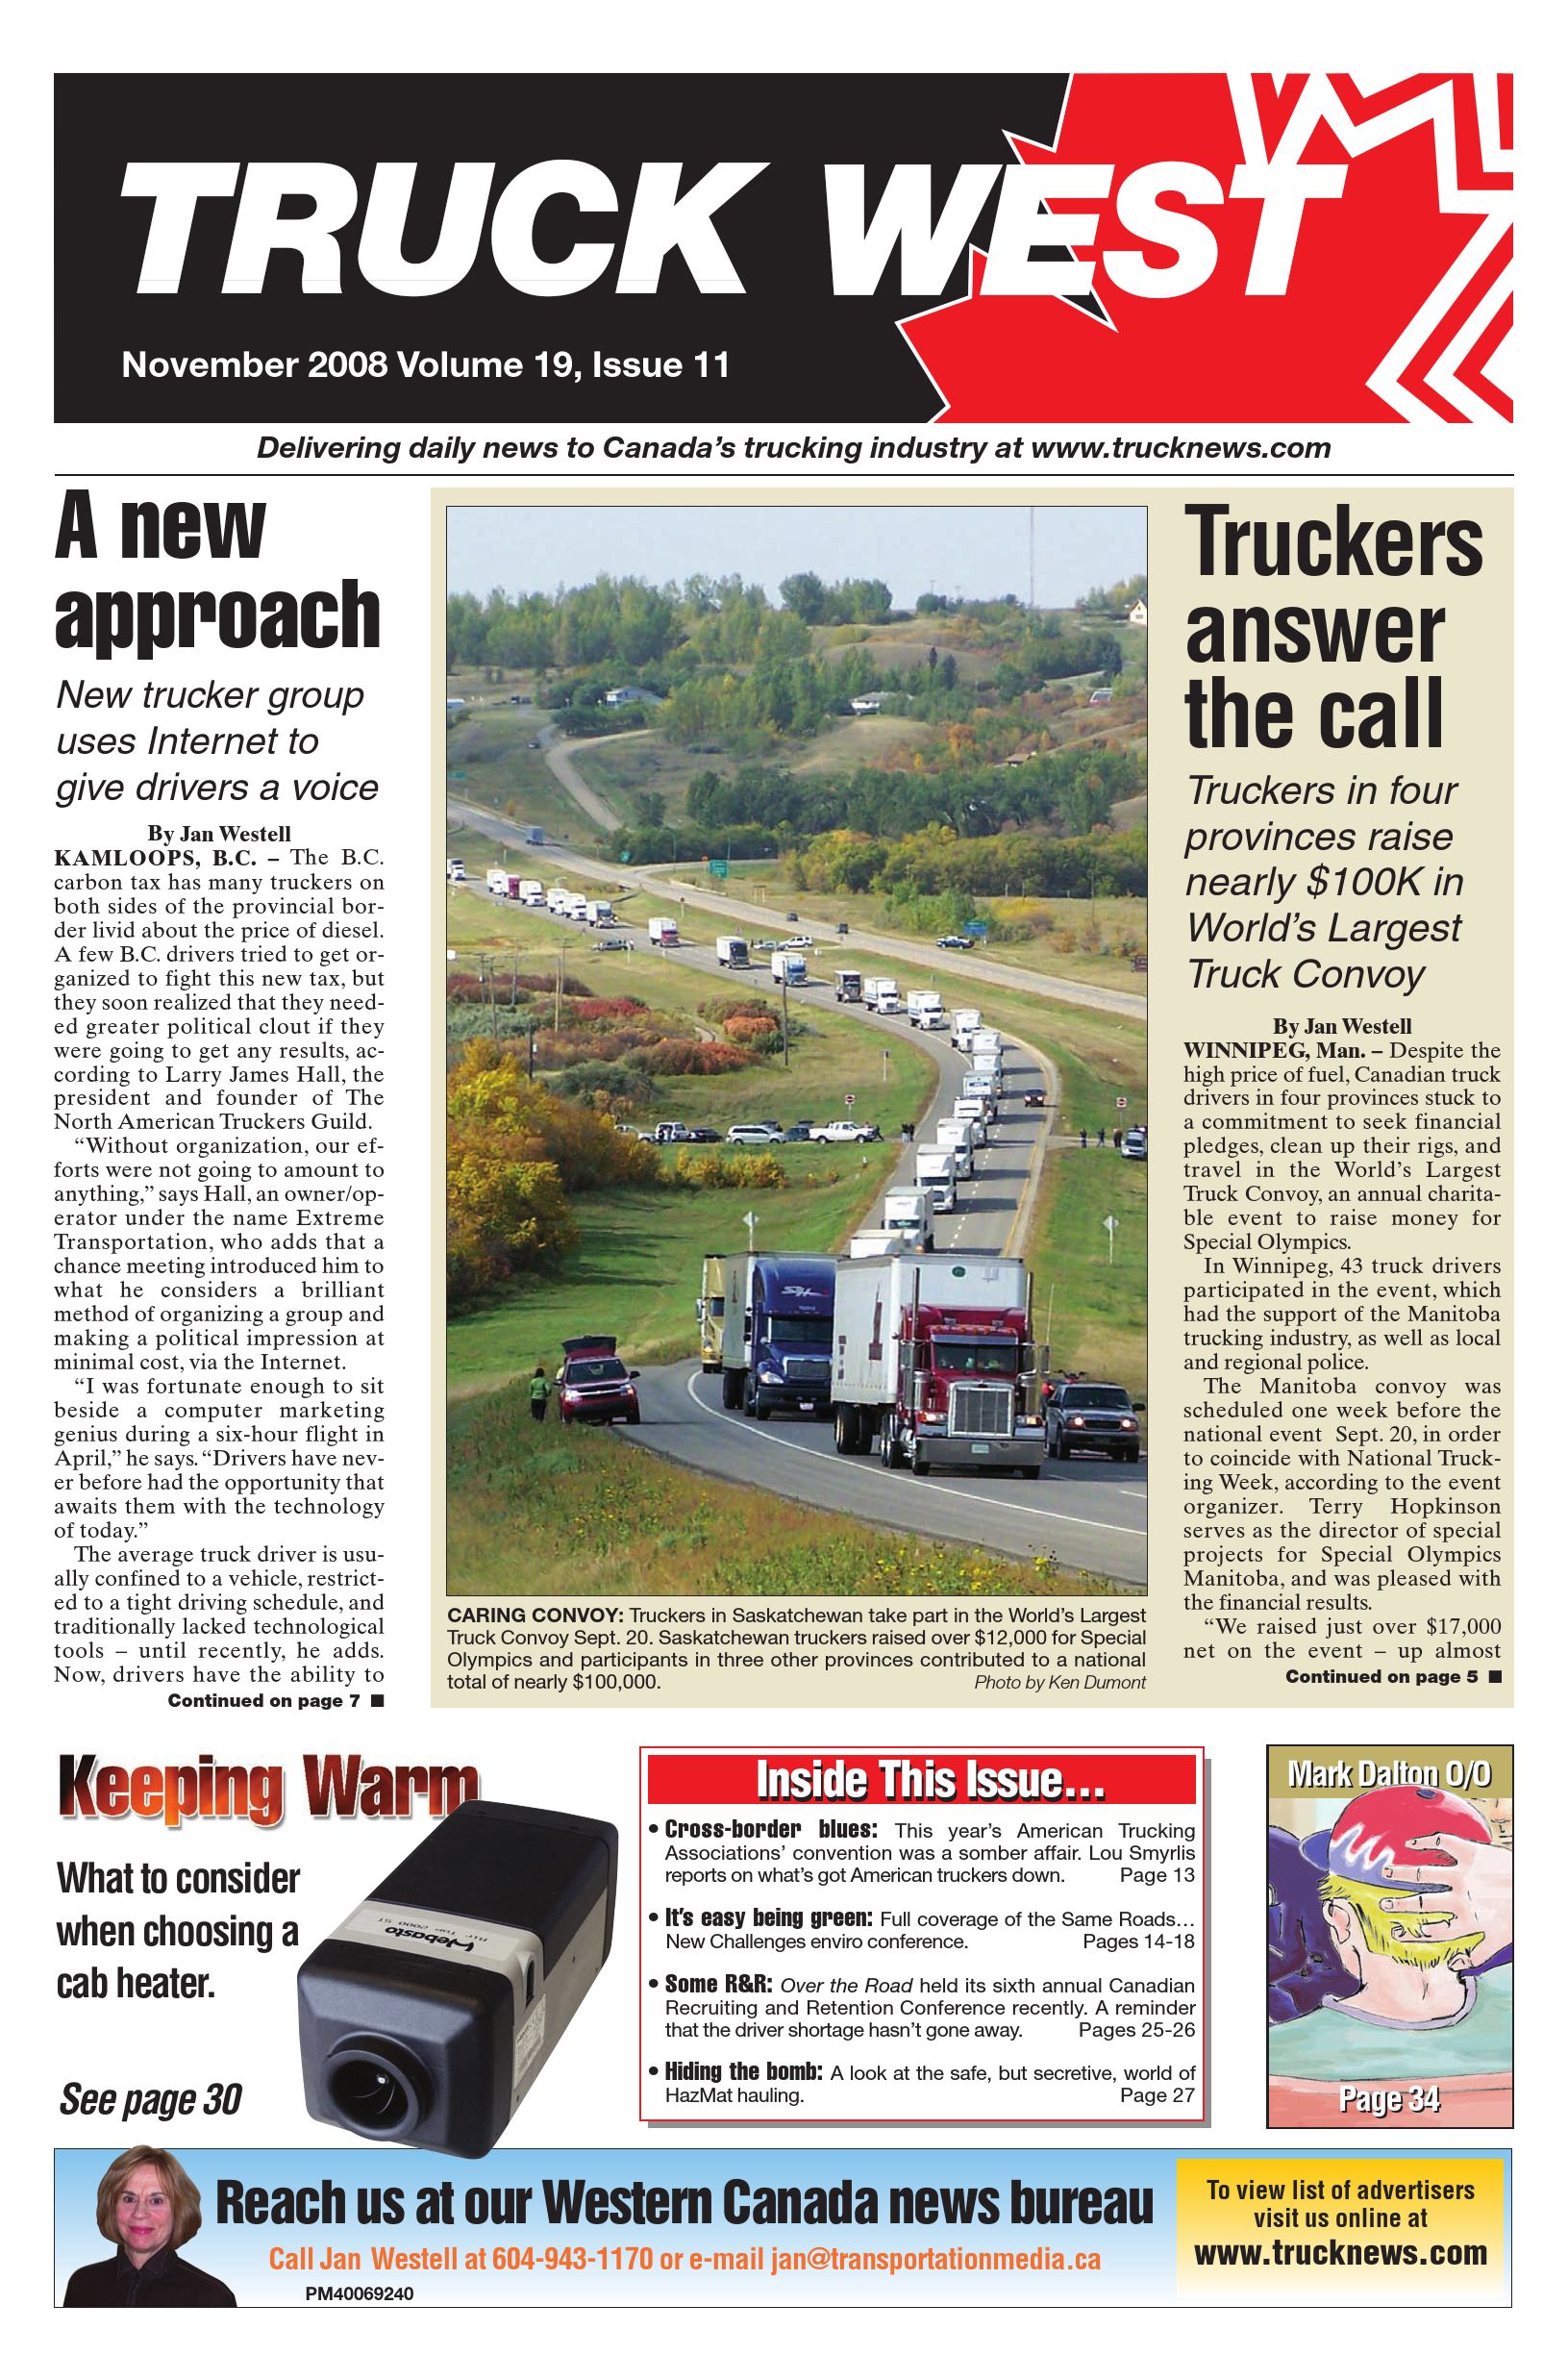 Truck News West – November 2008